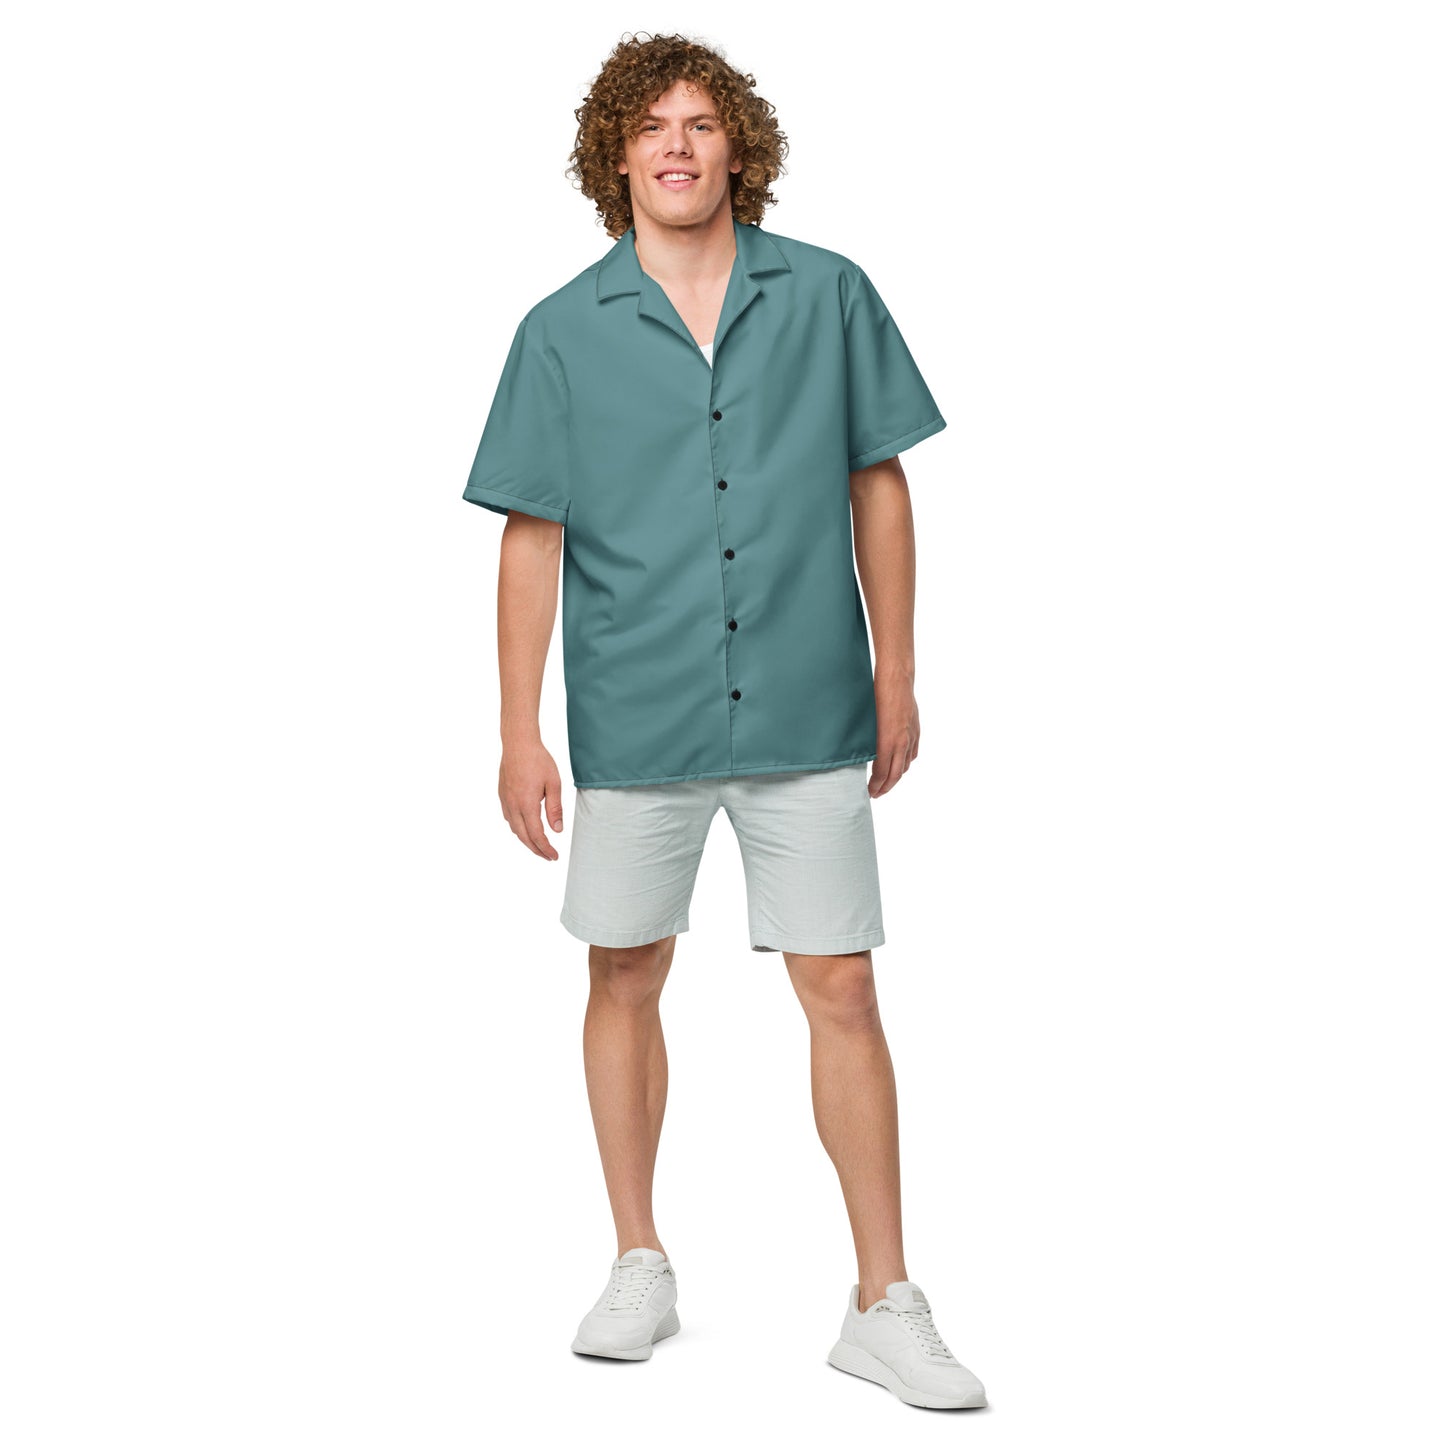 Ocean Green button shirt - Tropical Seas Clothing 